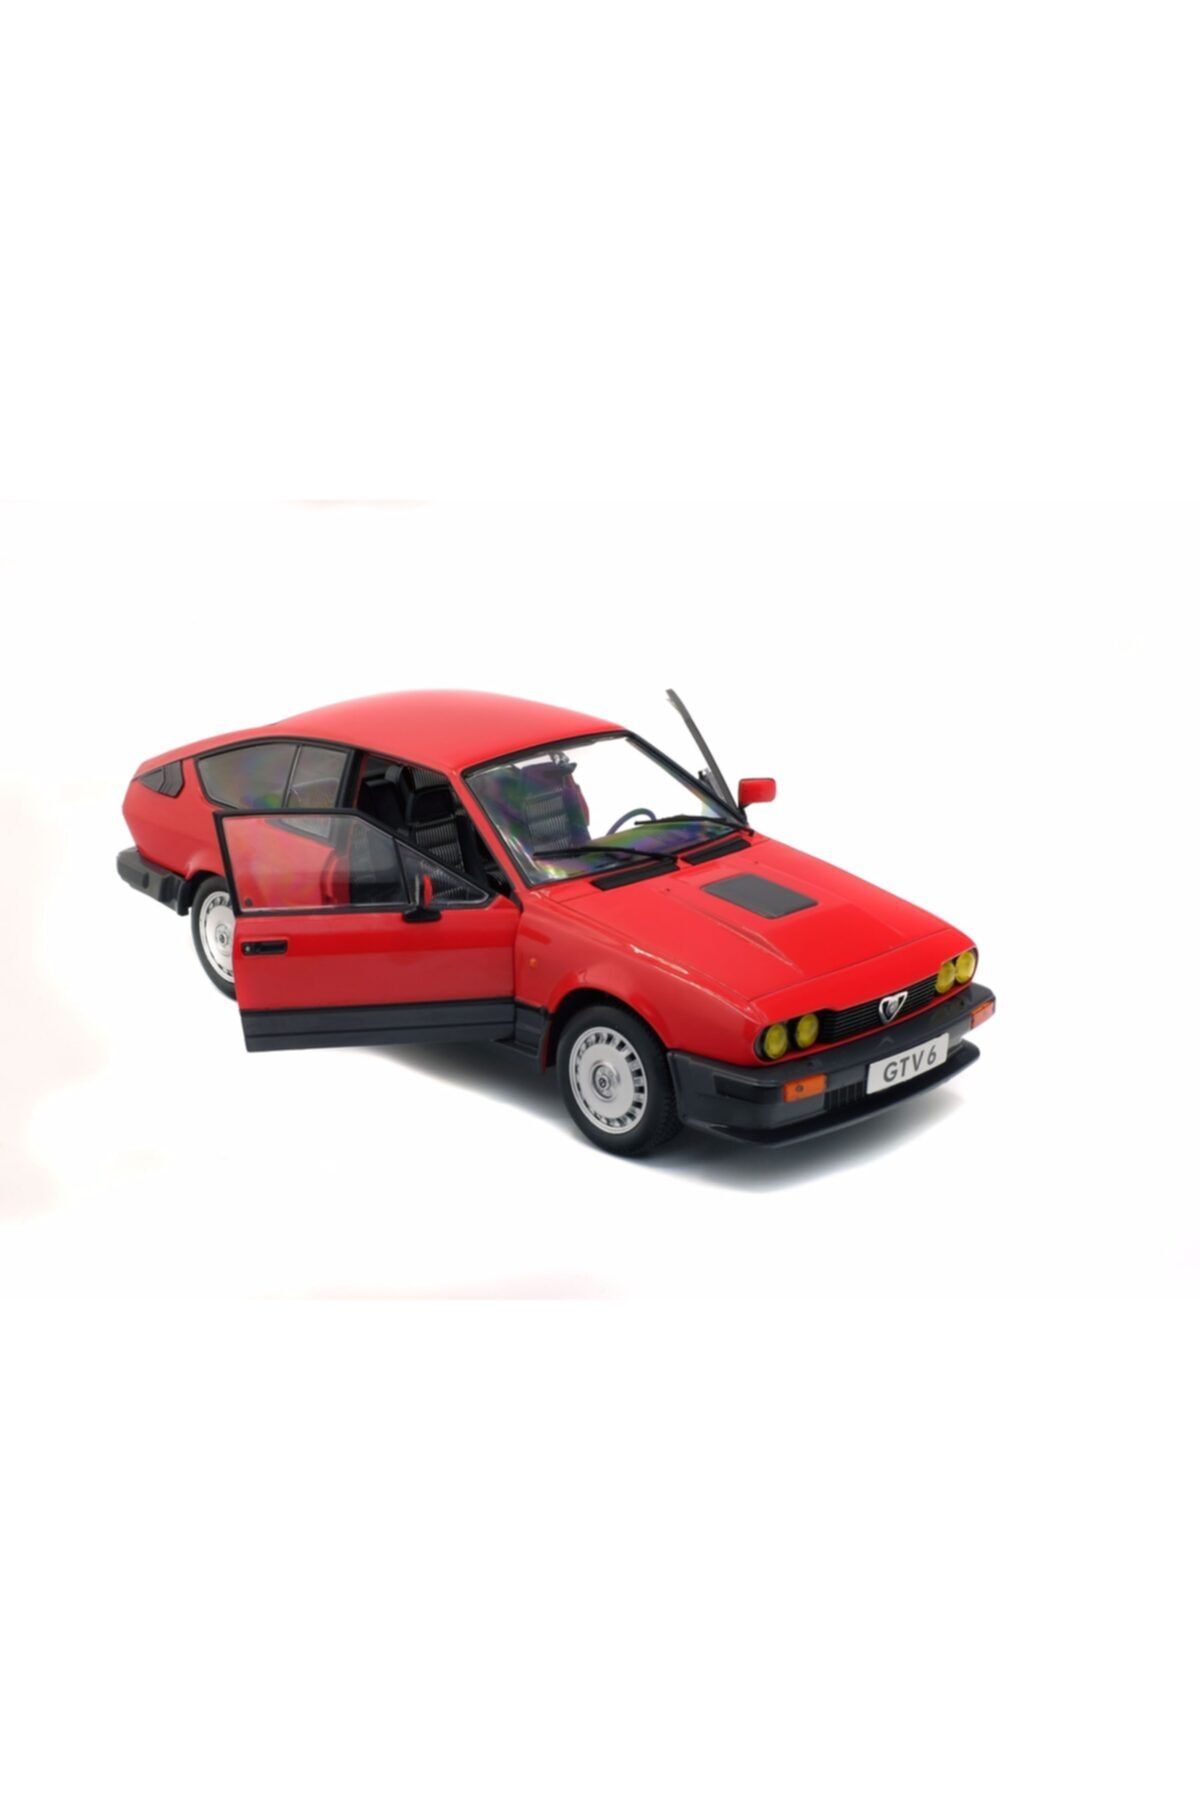 Solido 1/18 1984 Alfa Romeo Gtv 6 Diecast Model Araba Hayat Oyuncak